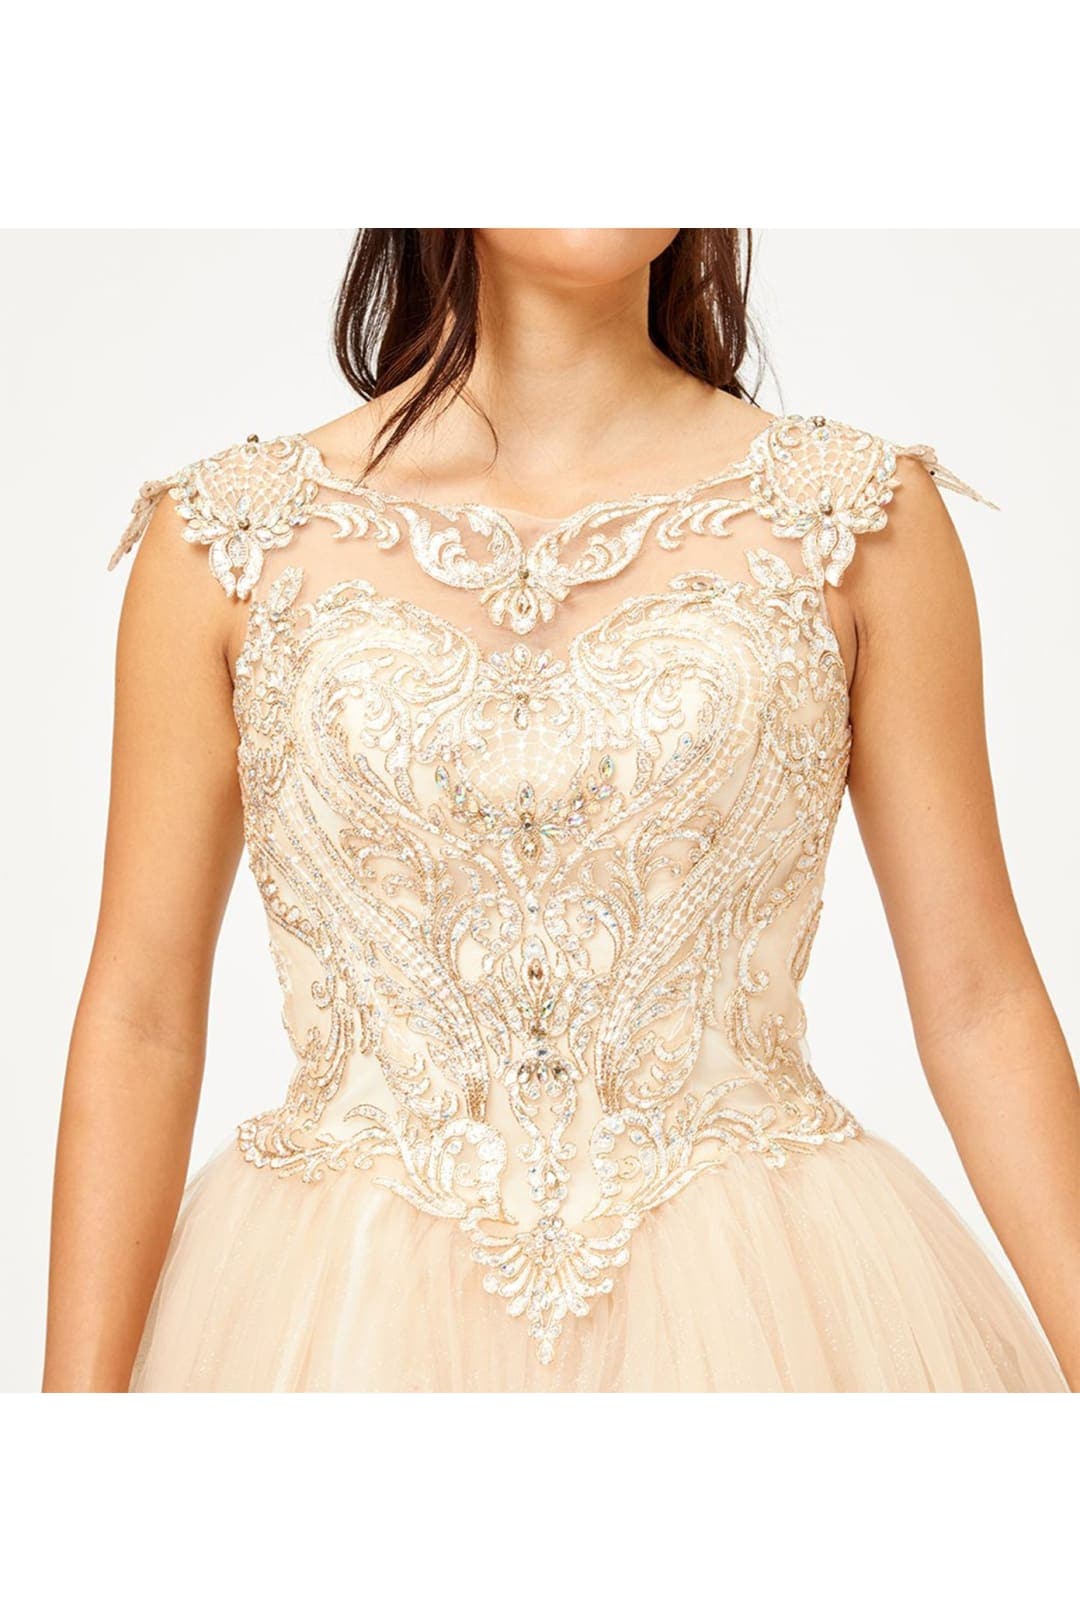 Cap Sleeve Princess Ball Gown - Champagne / 2 - Dress